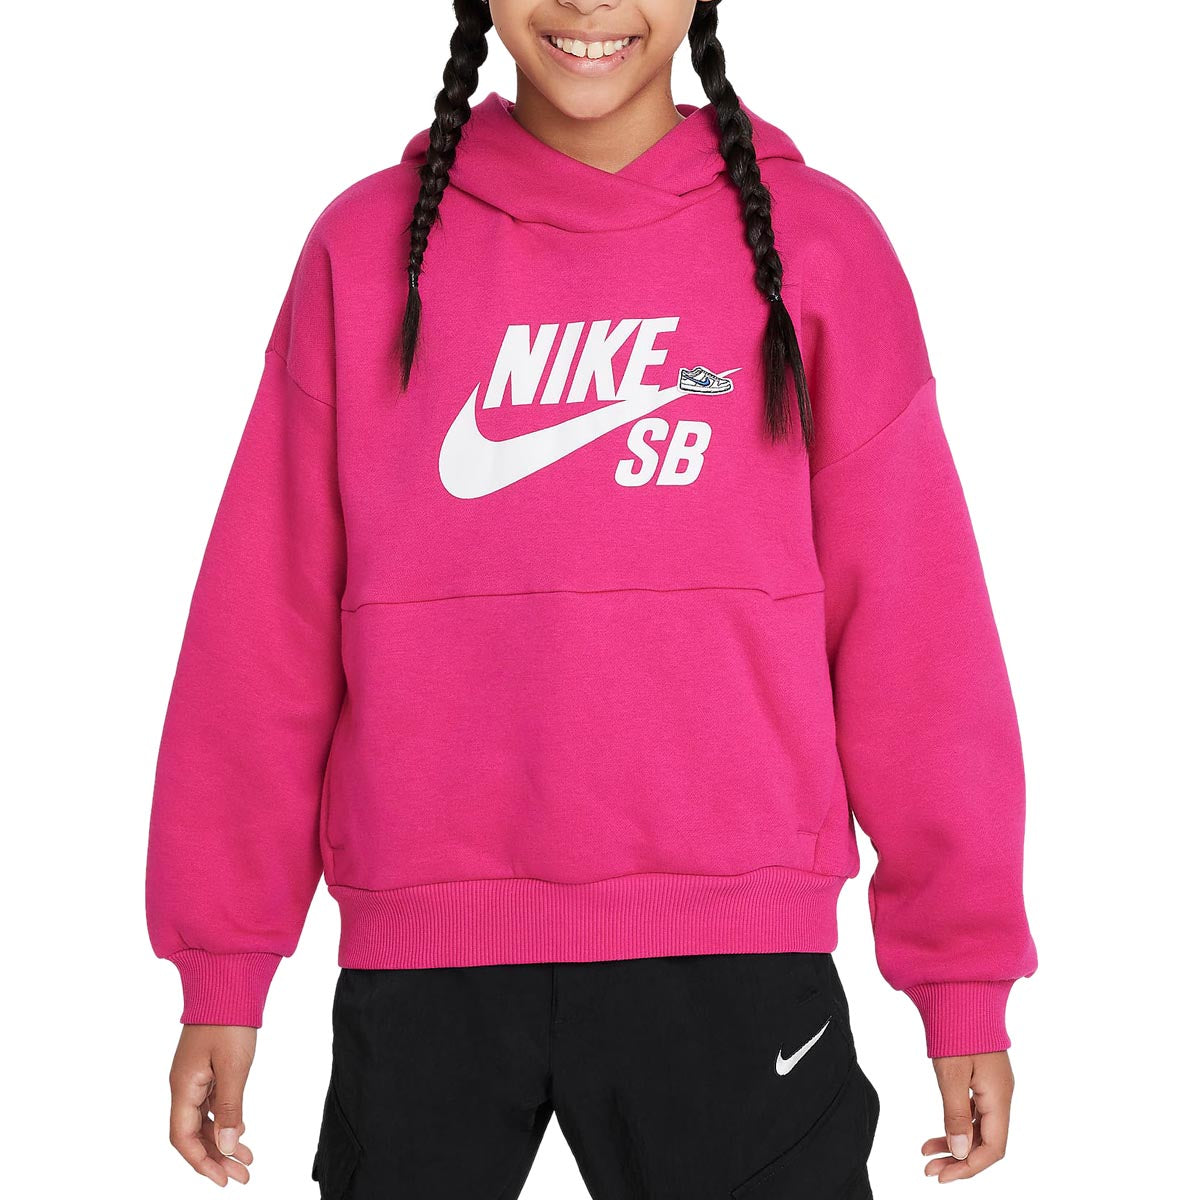 Nike SB Youth Icon Hoodie - Fireberry/White image 1